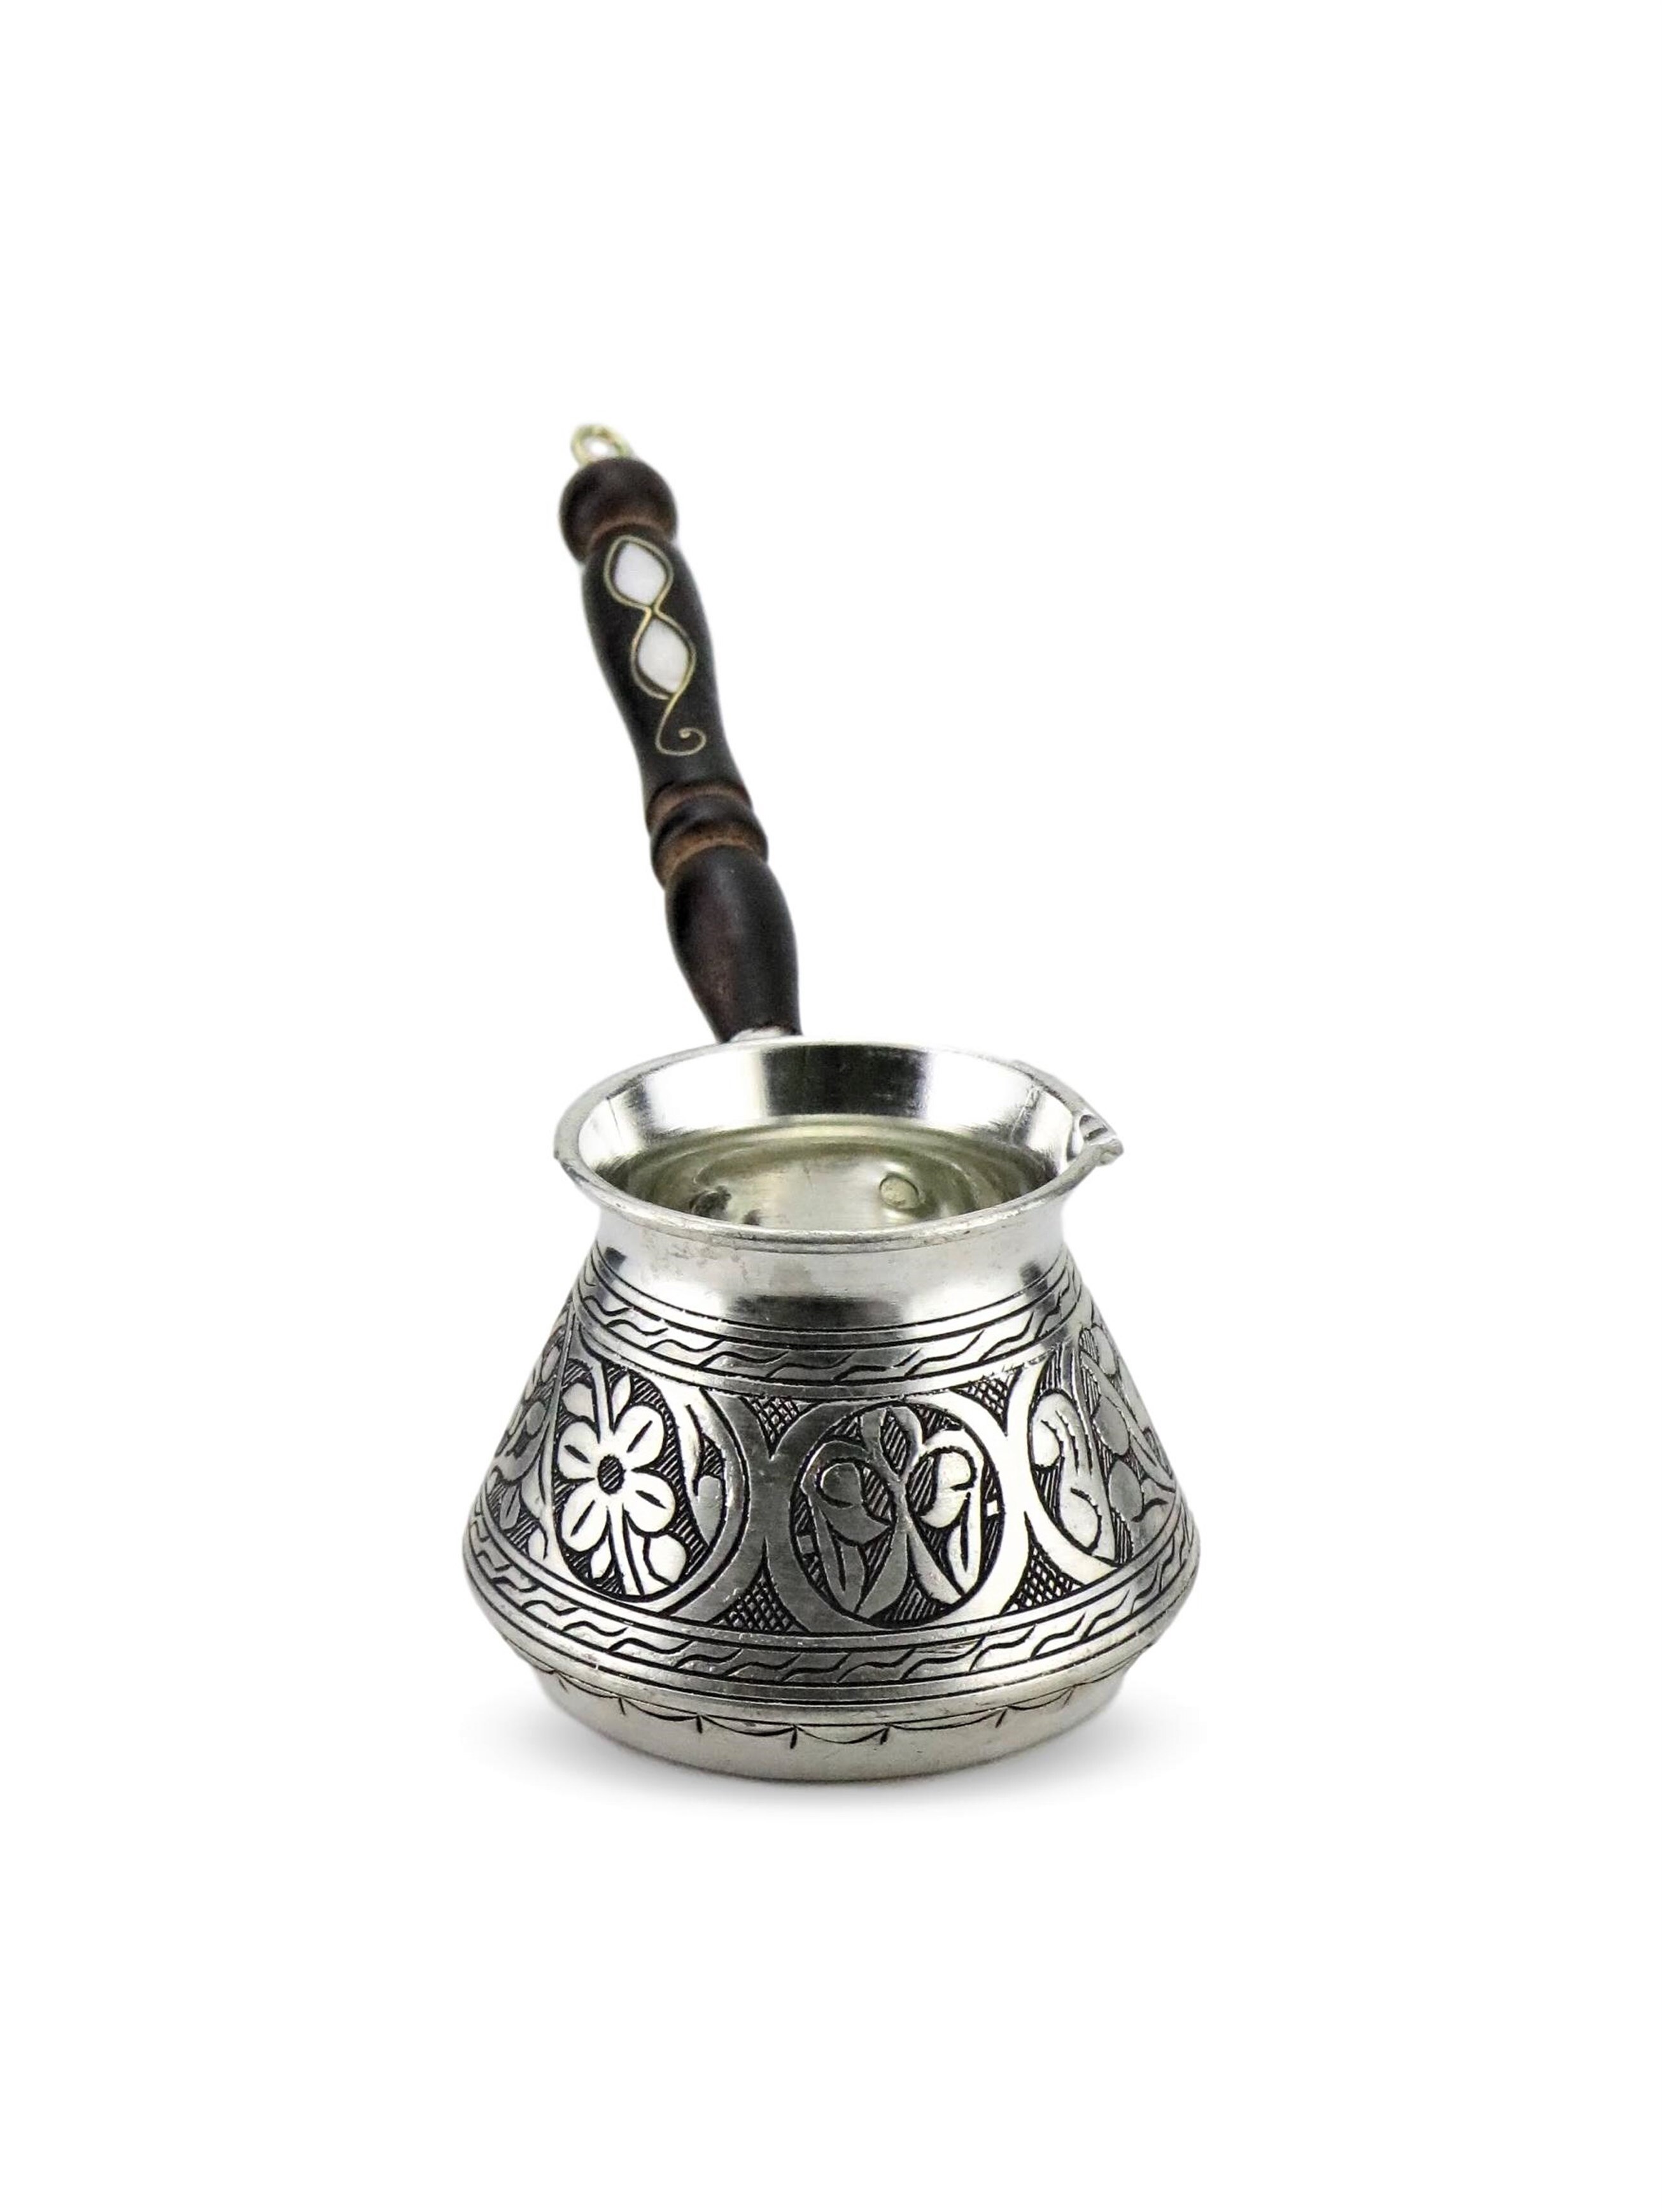 Ren kobber tyrkisk kaffekande | tyrkisk kaffemaskine | ibrik | kaffekande af kobberkaffe | håndlavet kaffe jezve | tyrkisk kaf